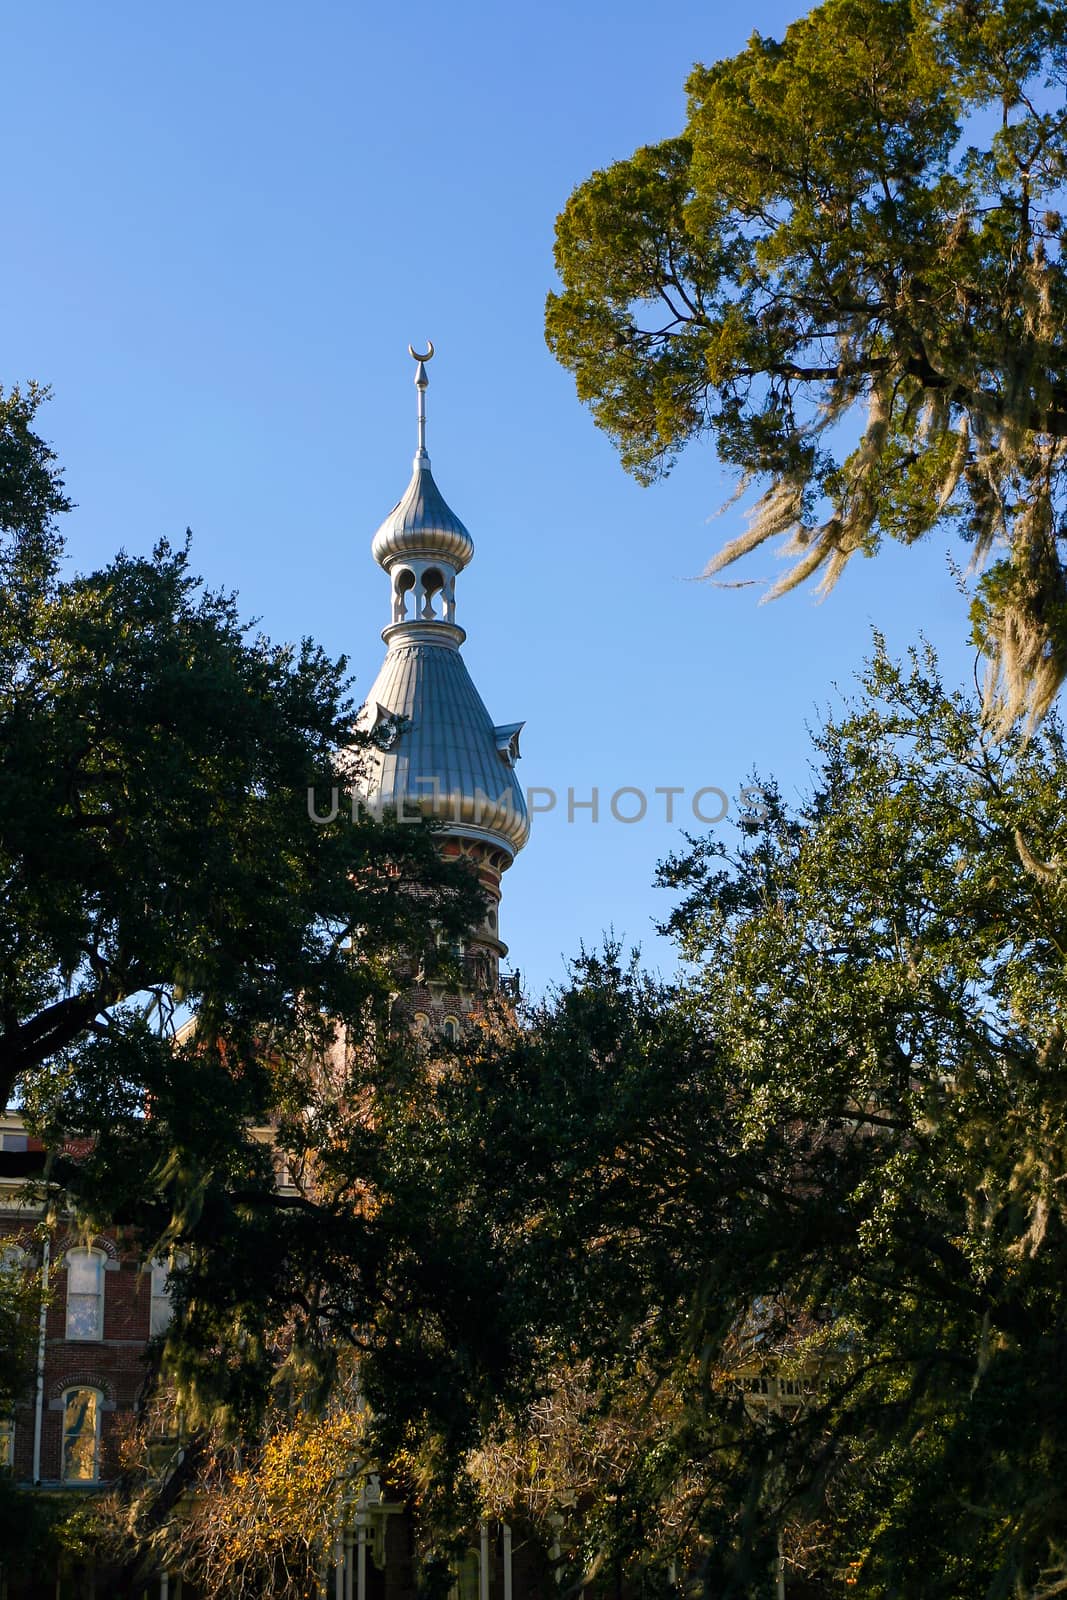 Moorish towers architecture silhouette of the University of Tampa, Florida